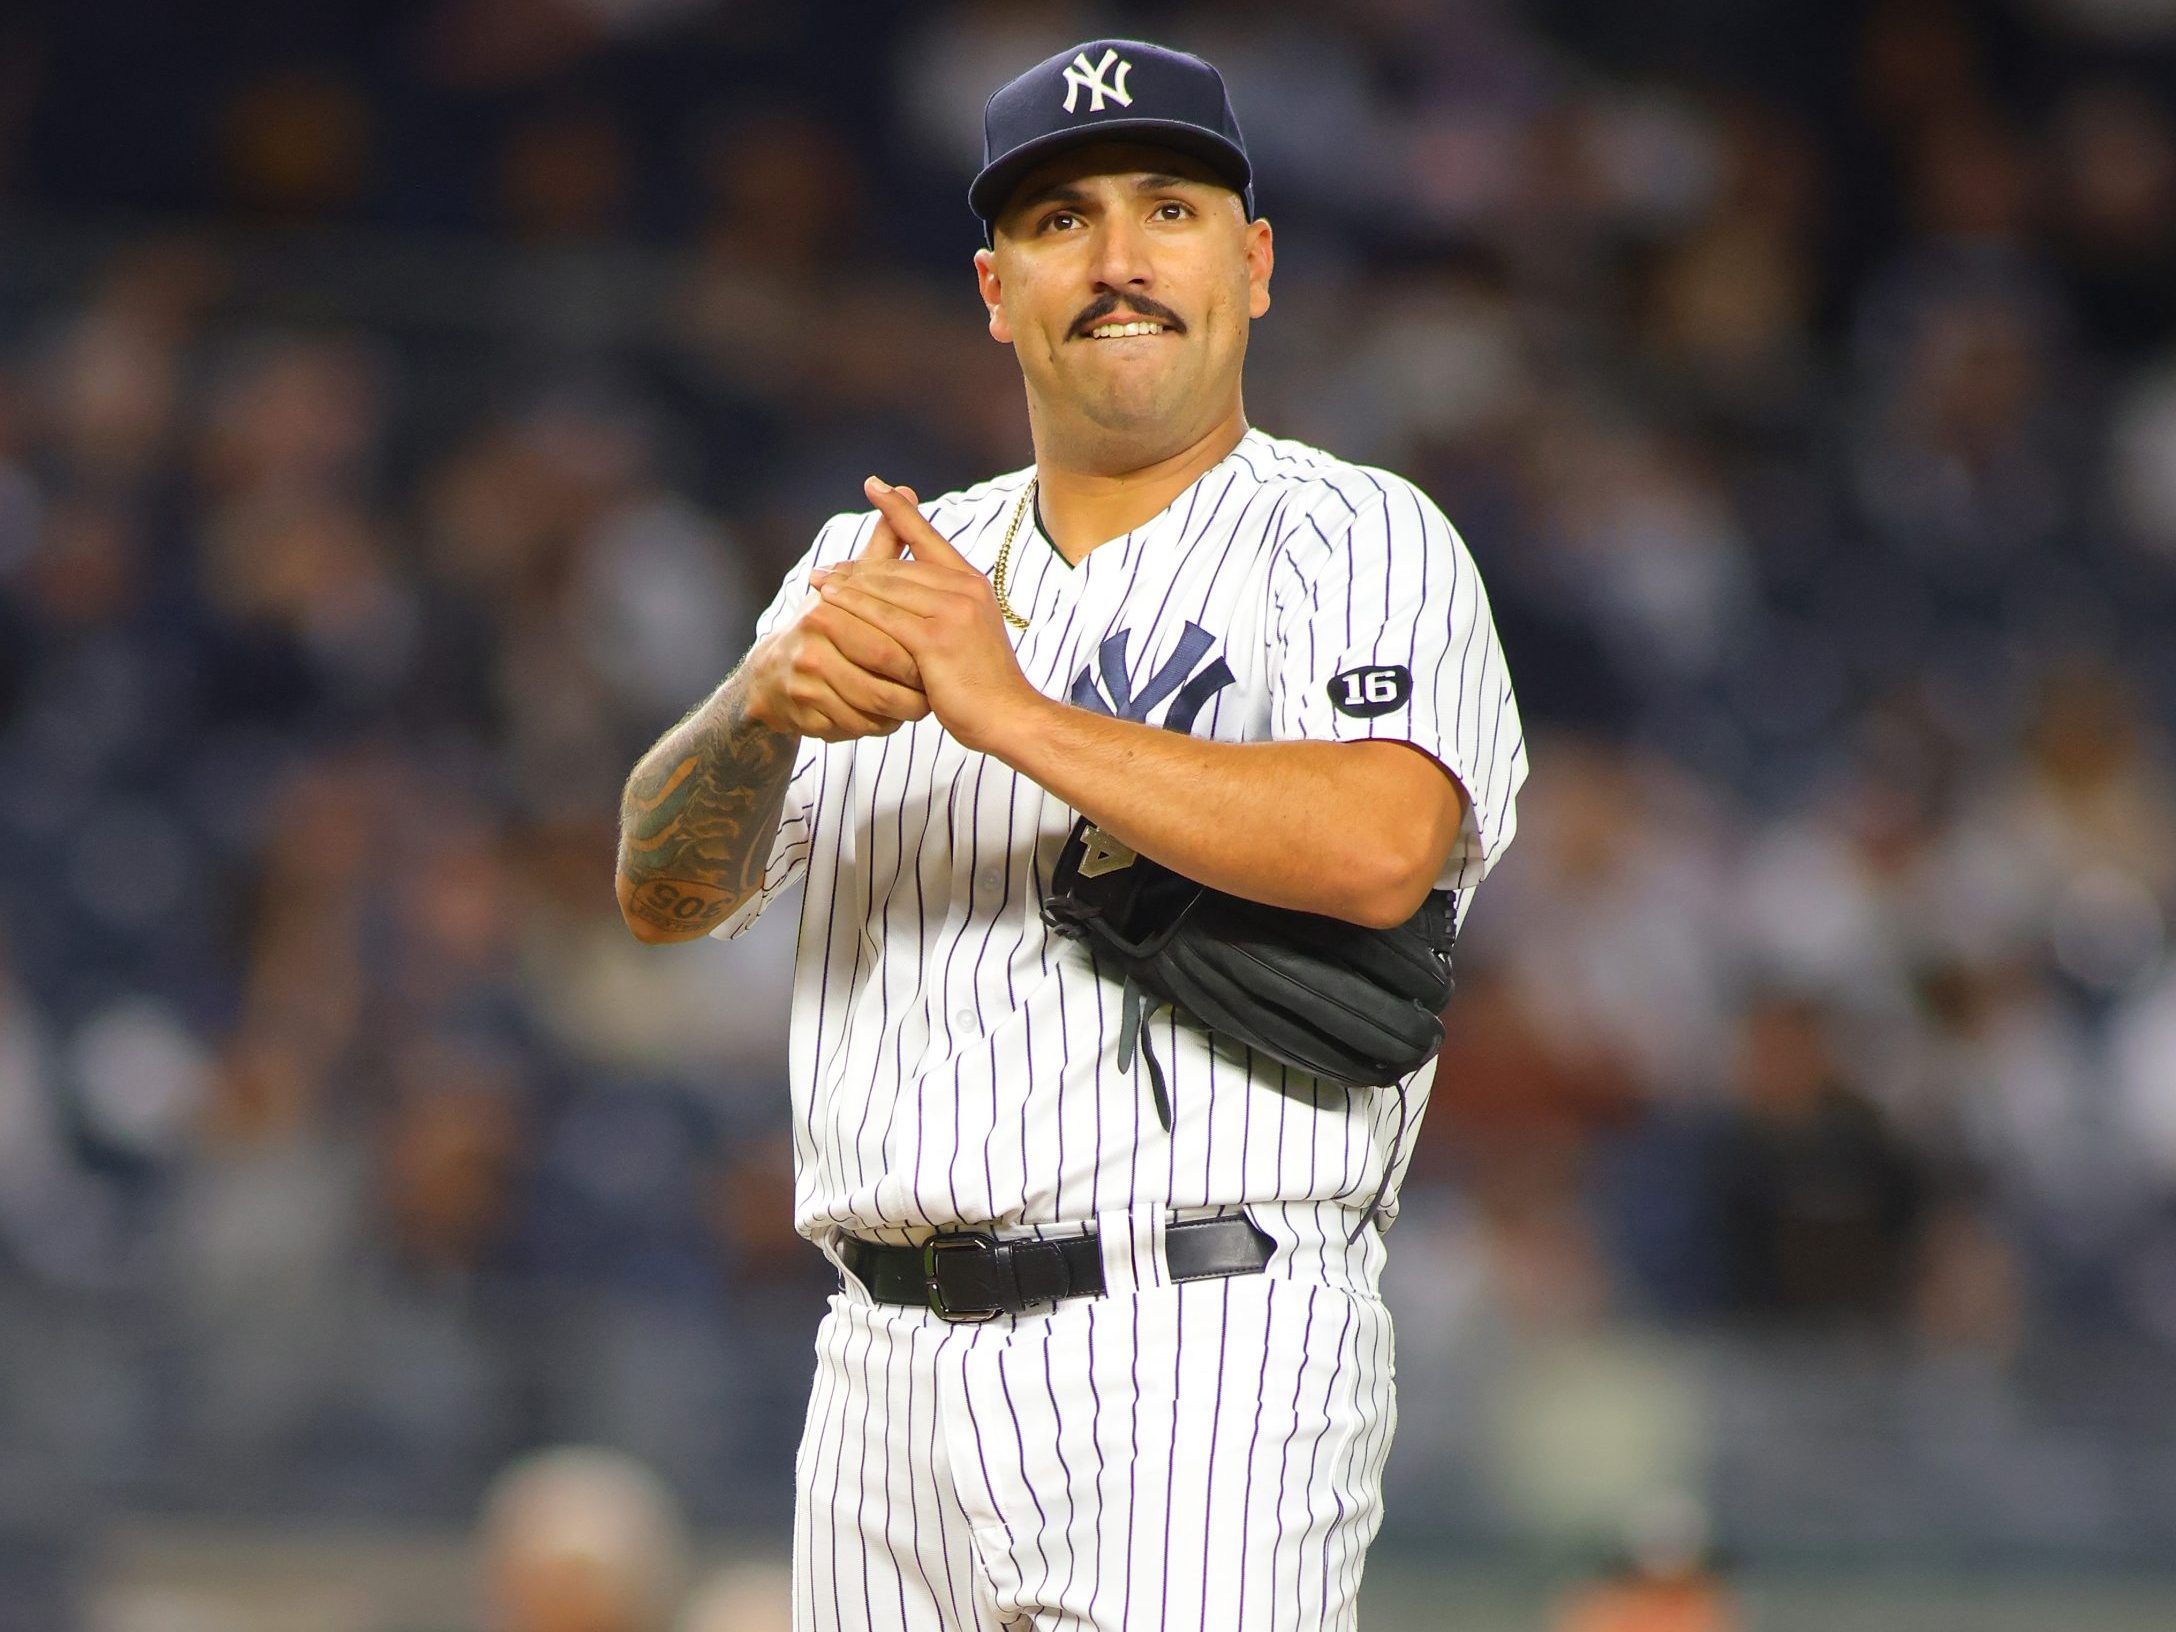 Nestor Cortes Jr. has been enshrined in Yankees lore